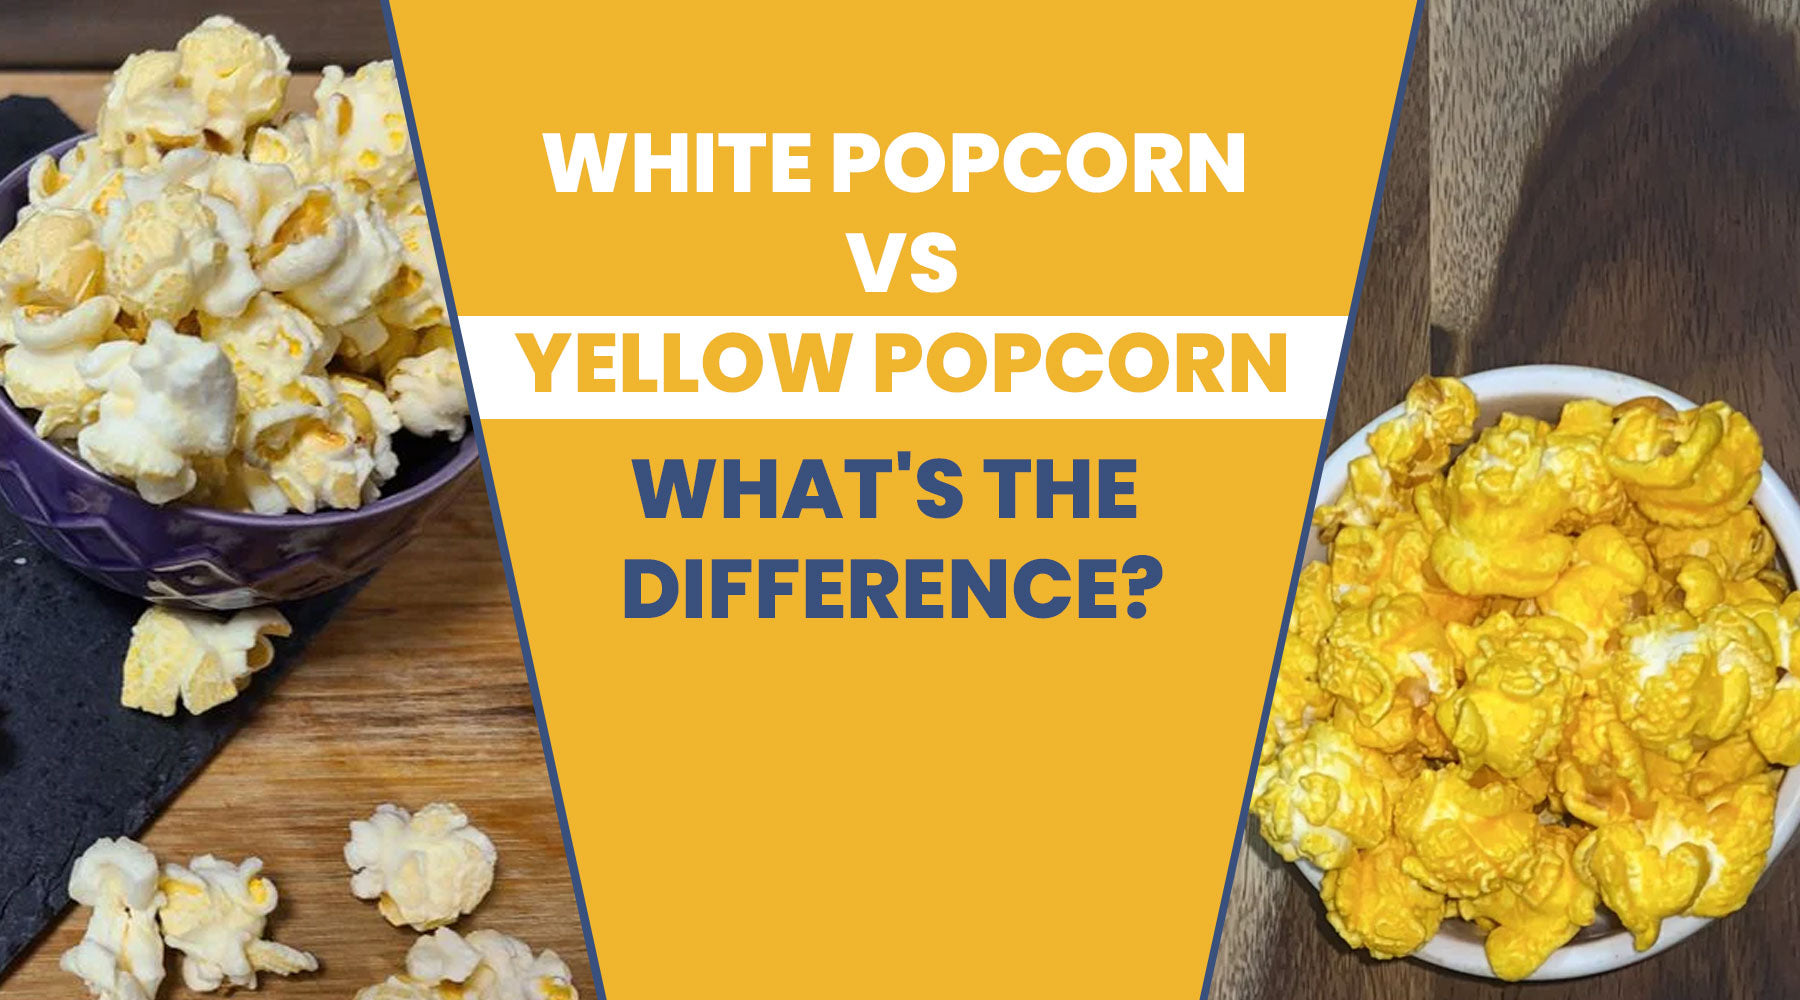 White popcorn vs Yellow popcorn